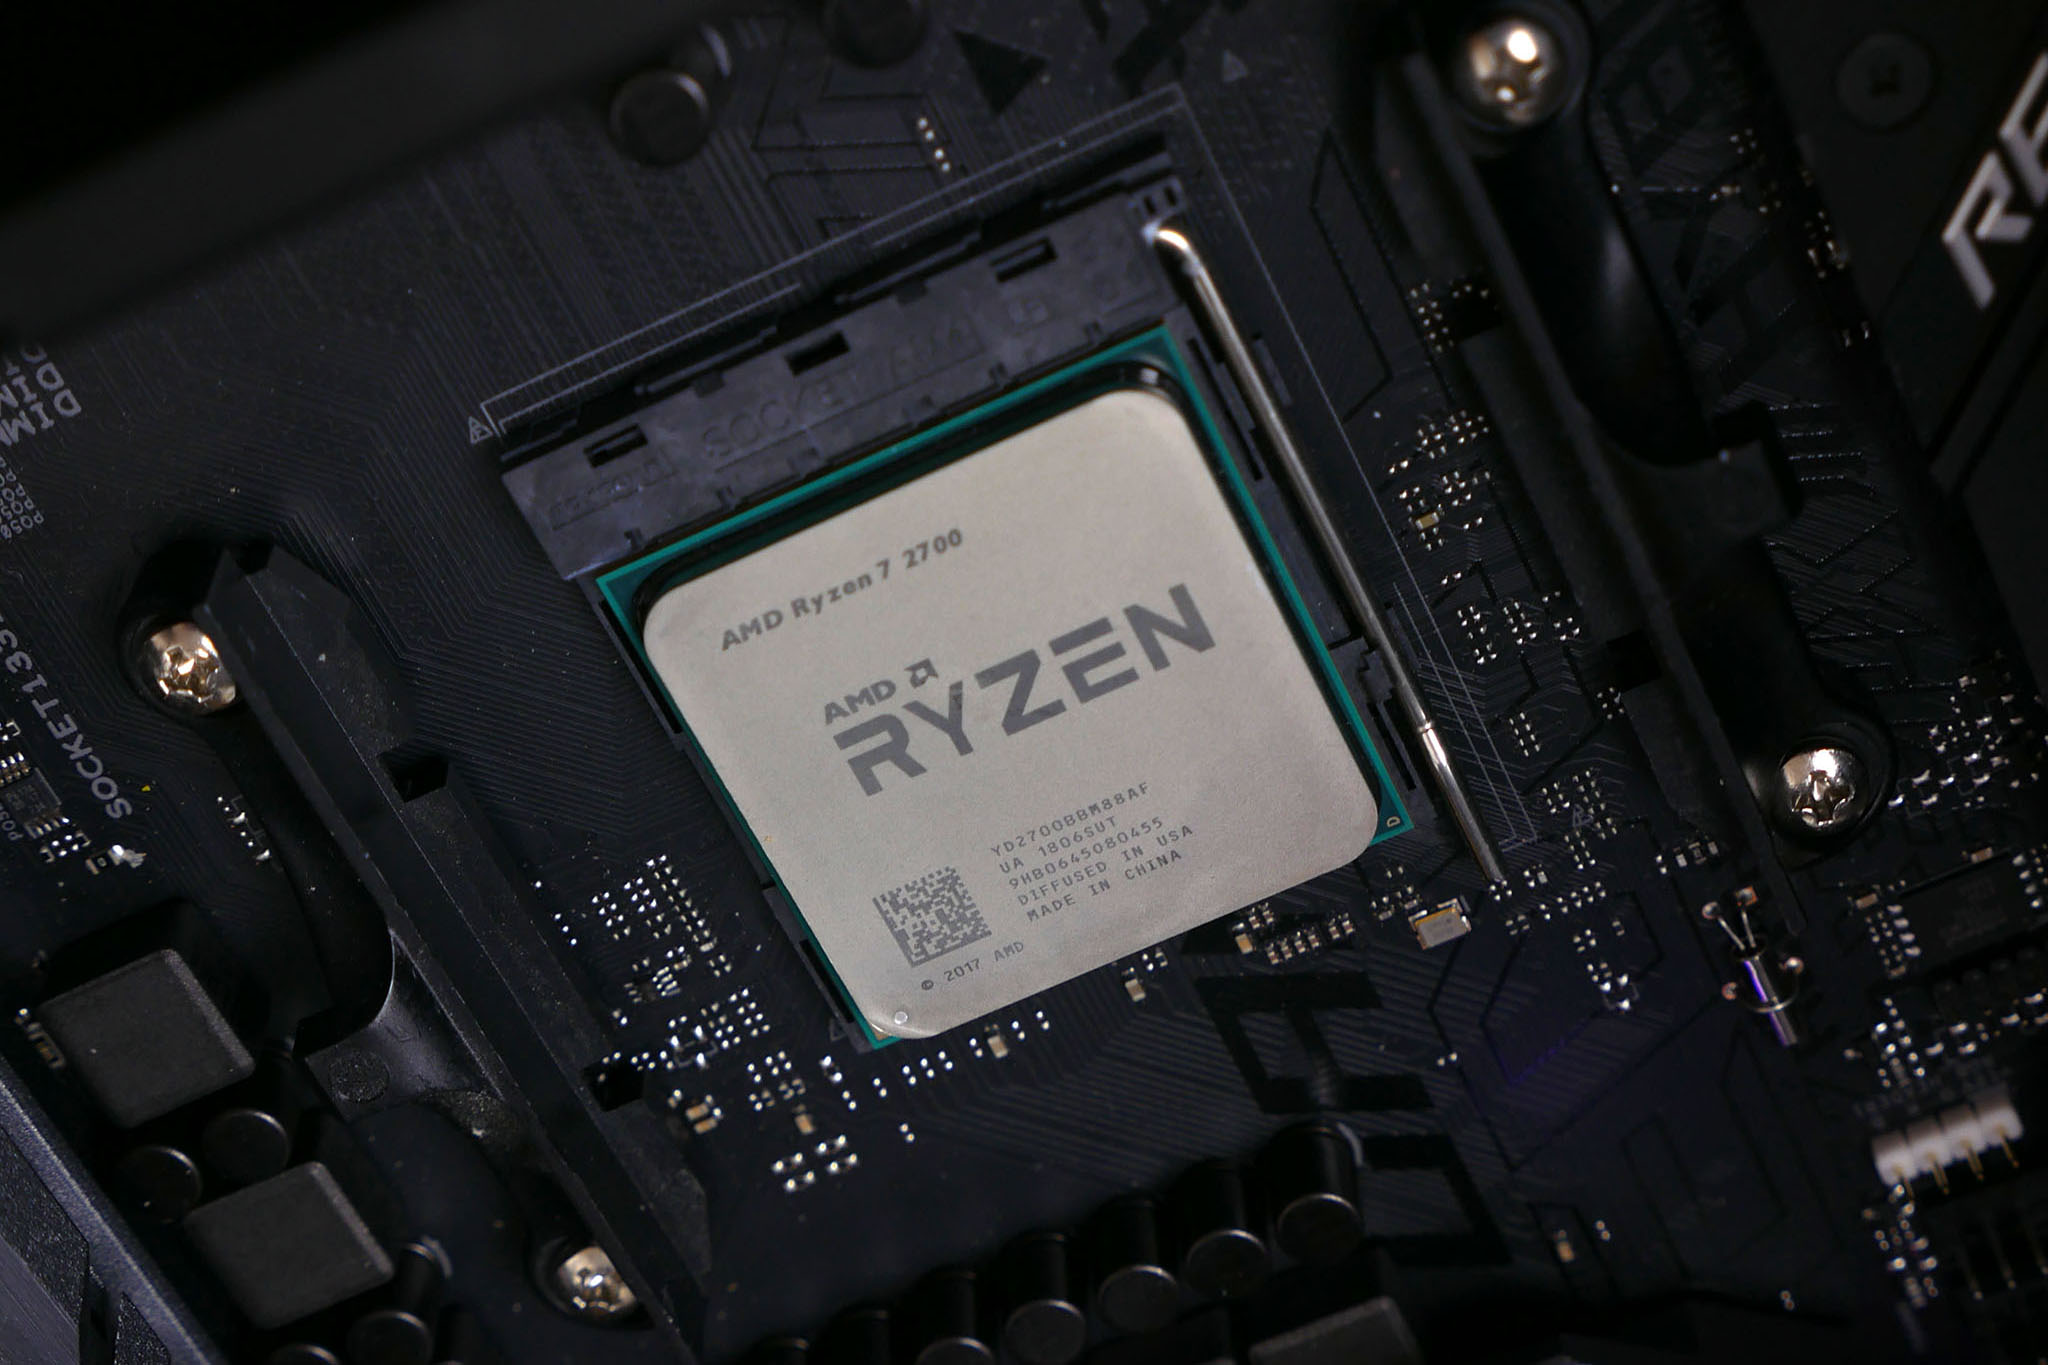 7 2700 купить. Ryzen 7 2700. АМД 7 2700. Процессор AMD Ryzen 7 2700x. Ryzen 7 2600.